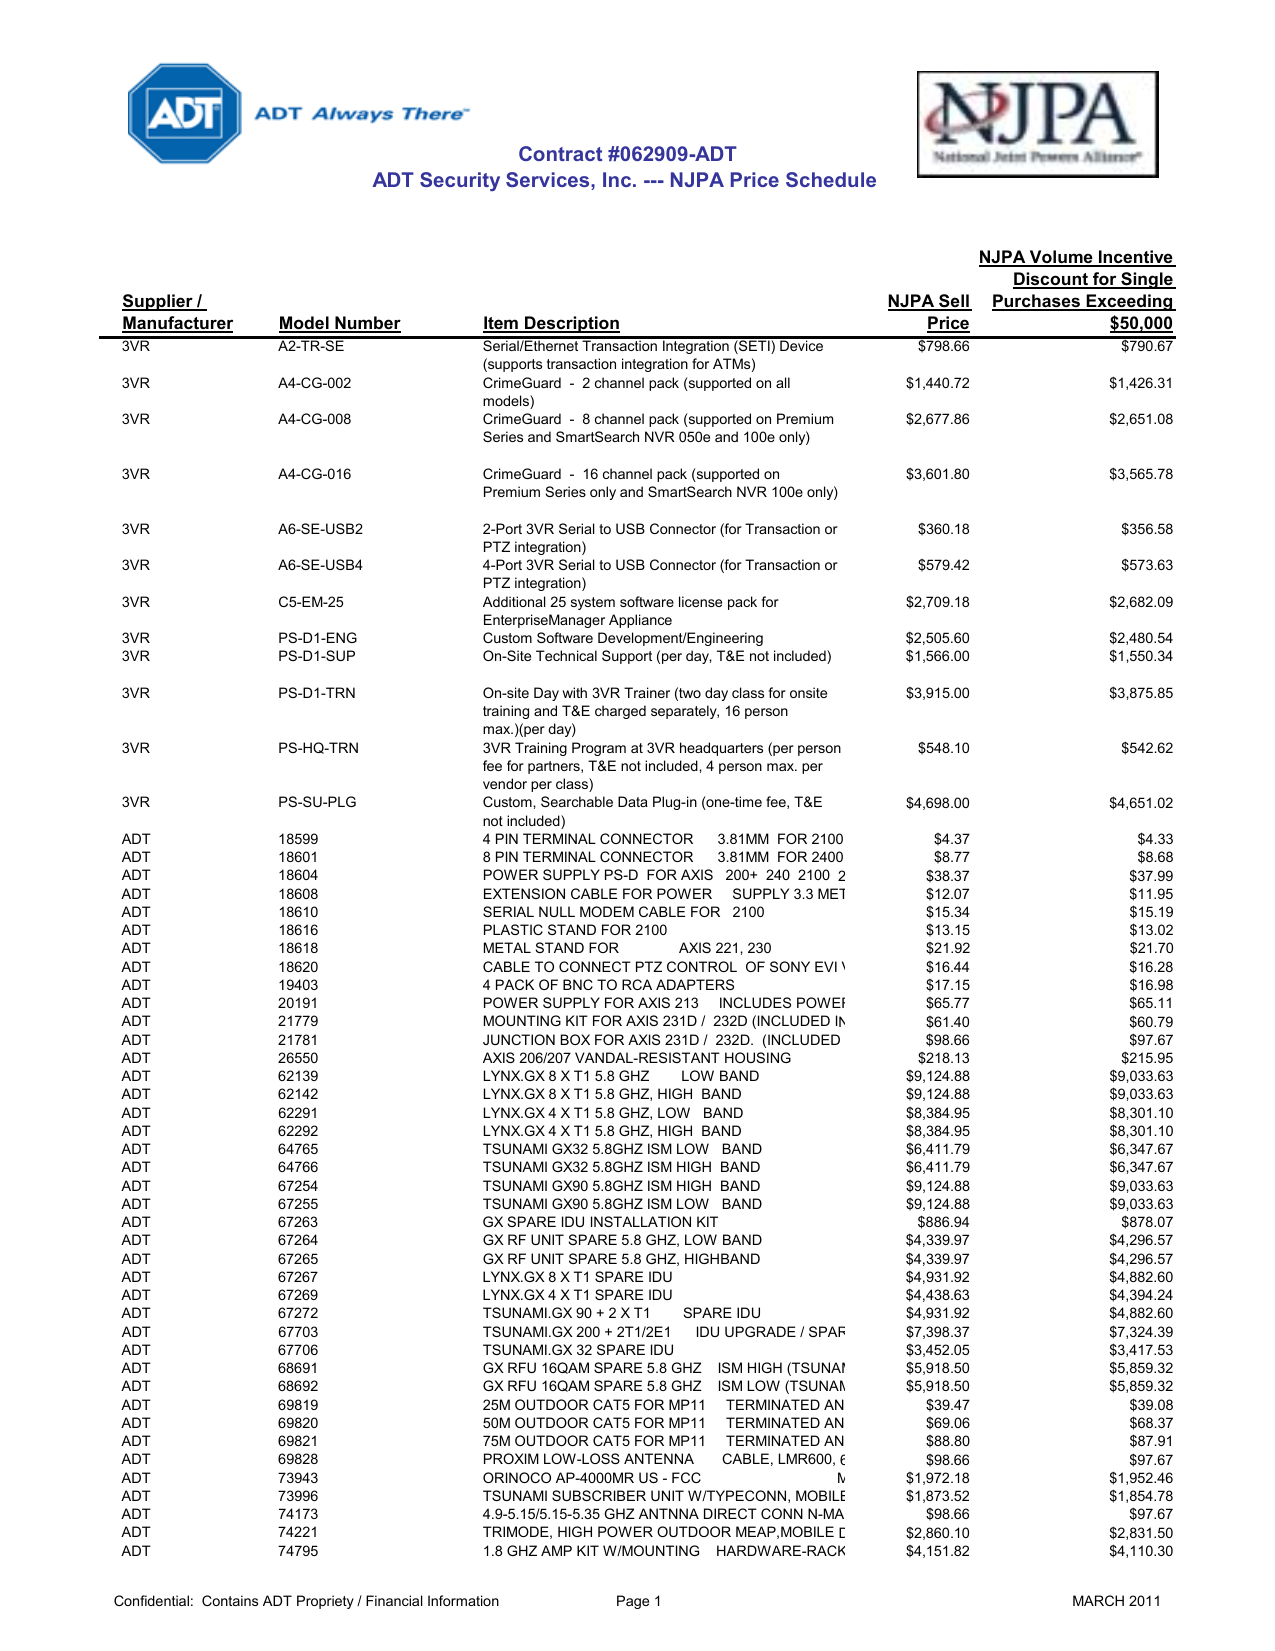 njpa price list working file march 2011 xlsx